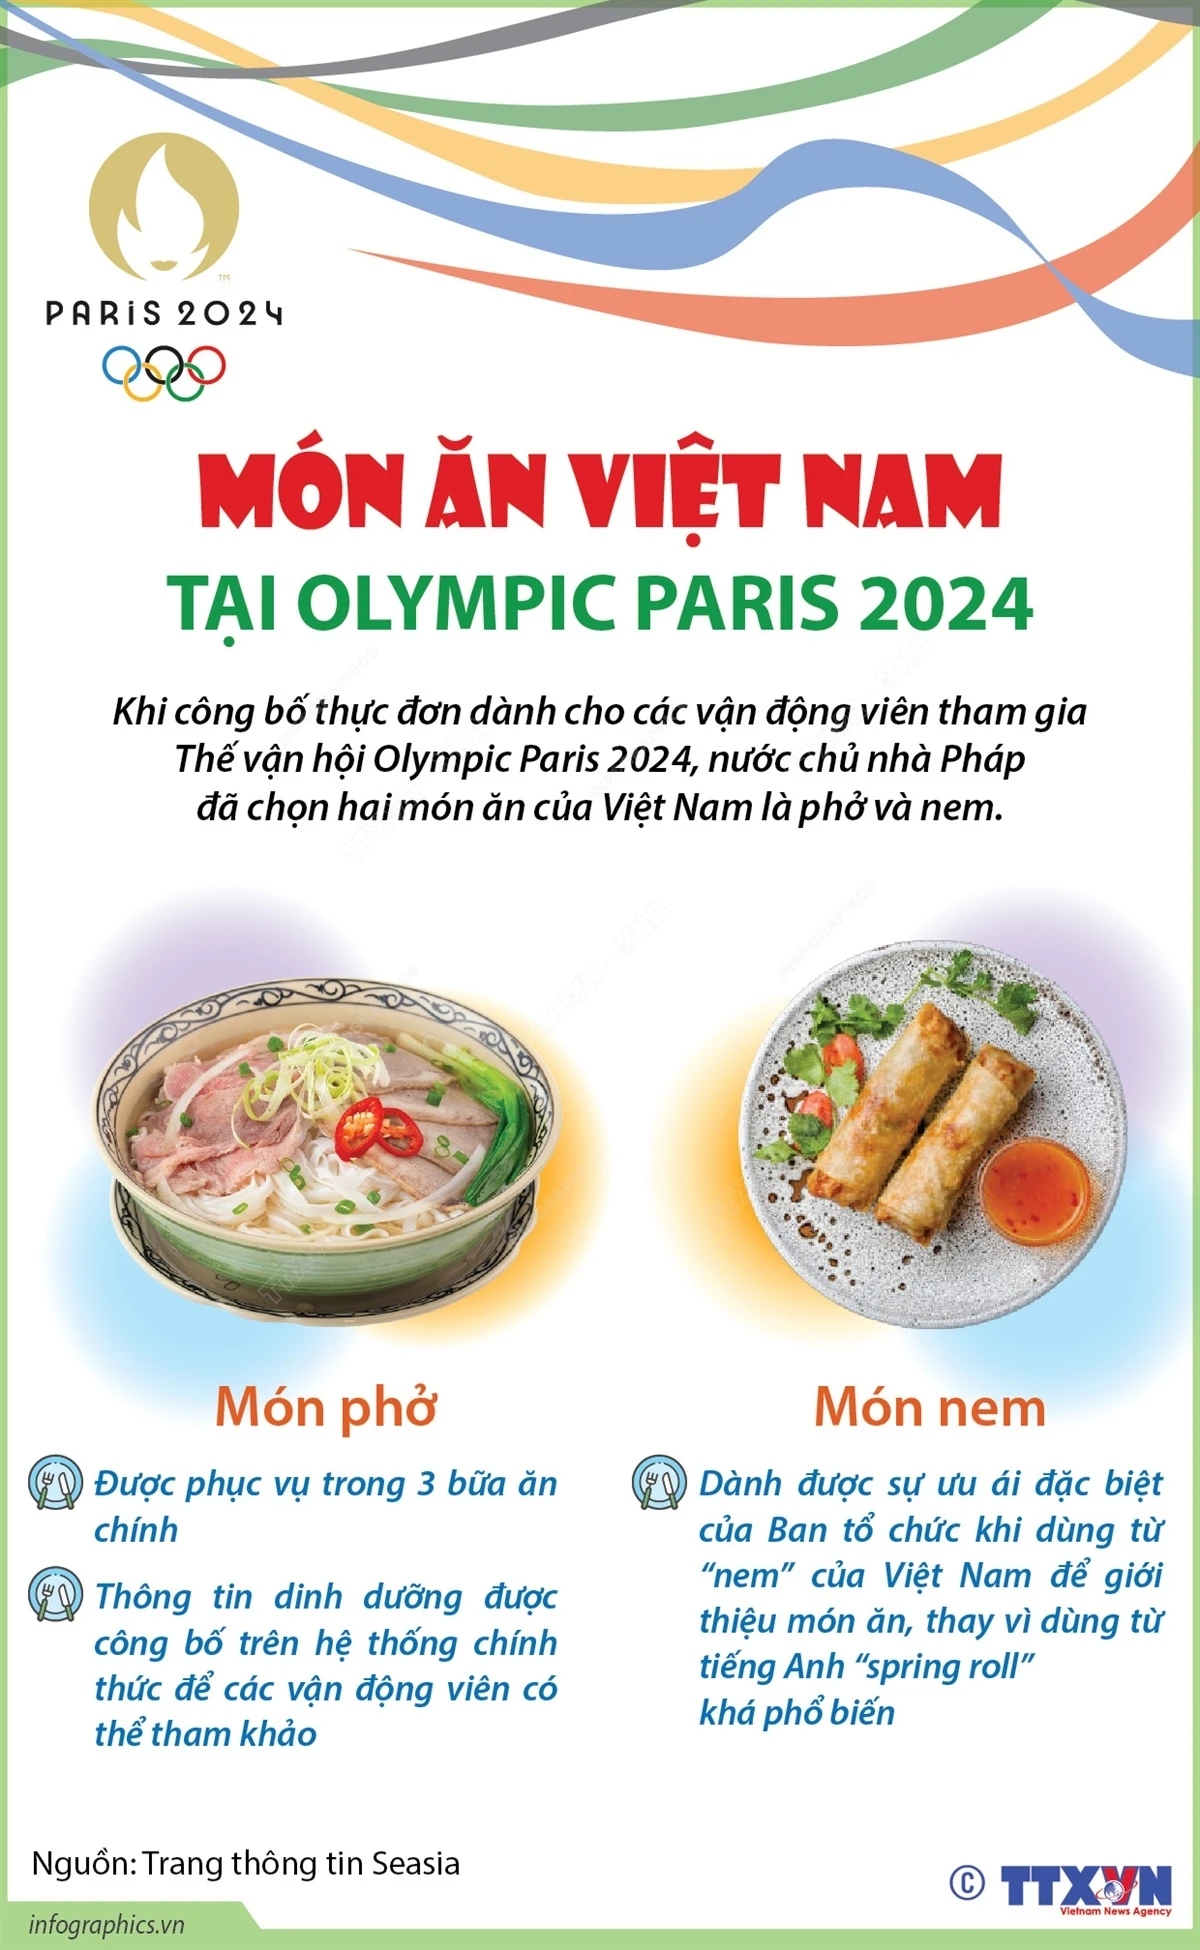 vna_potal_mon_an_viet_nam_tai_olympic_paris_2024.jpg